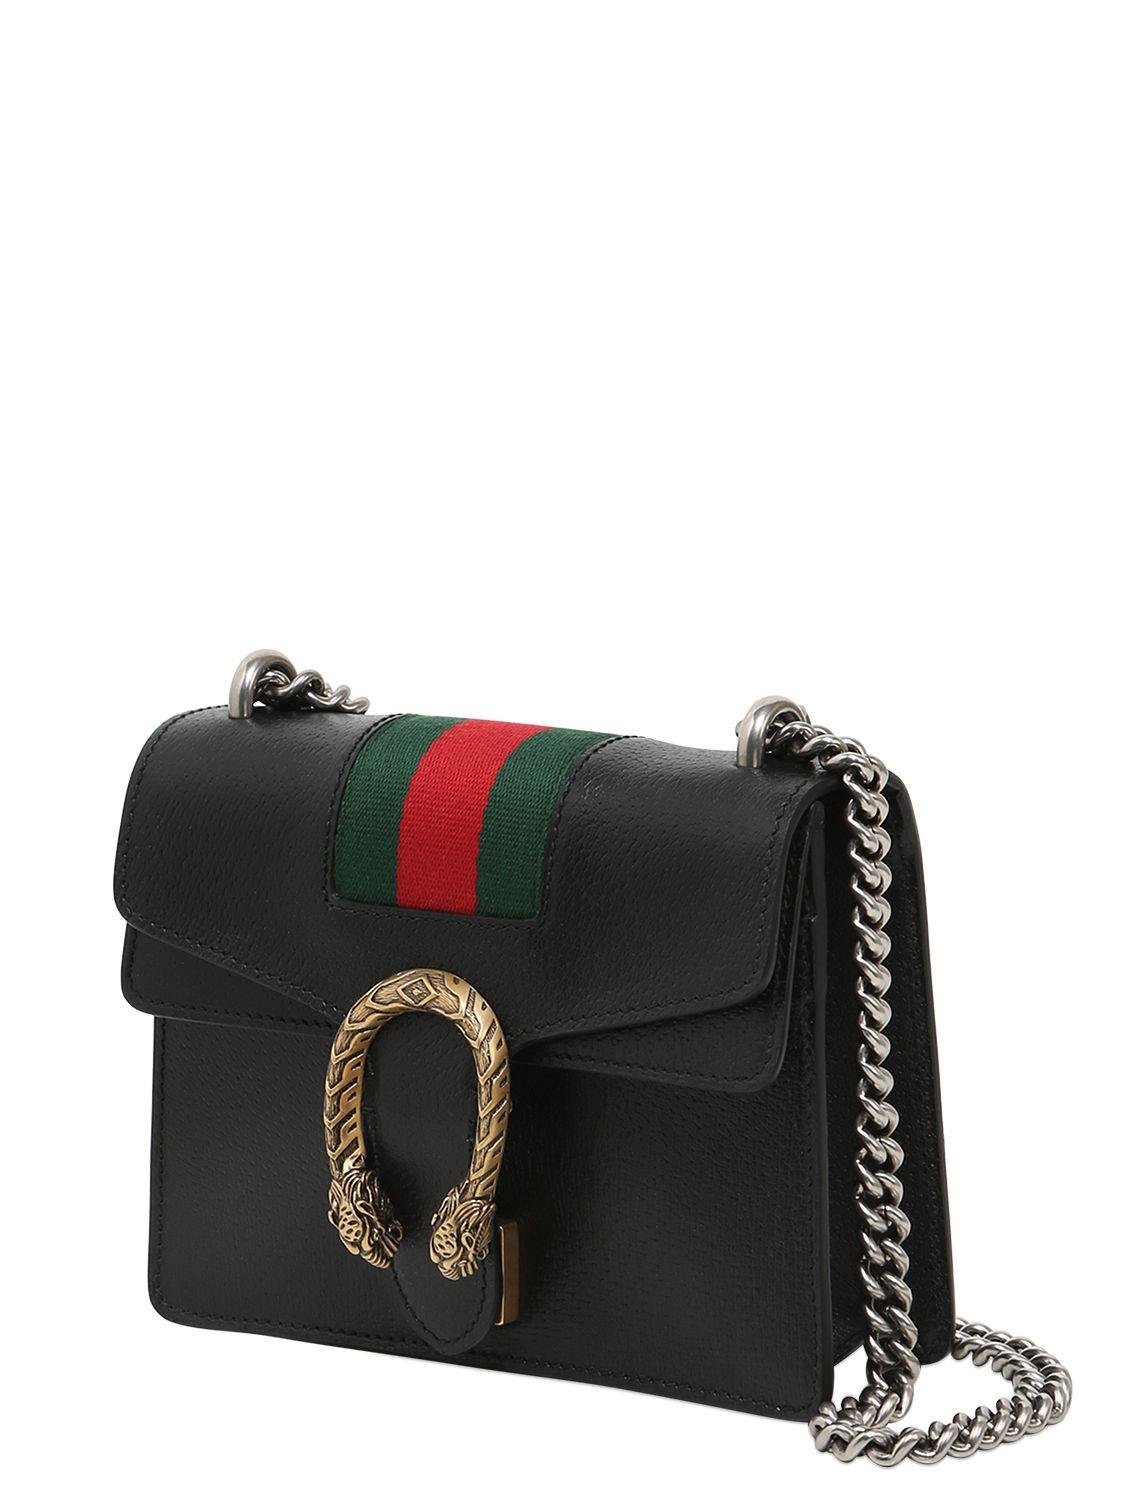 Lyst - Gucci Mini Dionysus Leather Bag W/ Web Detail in Black